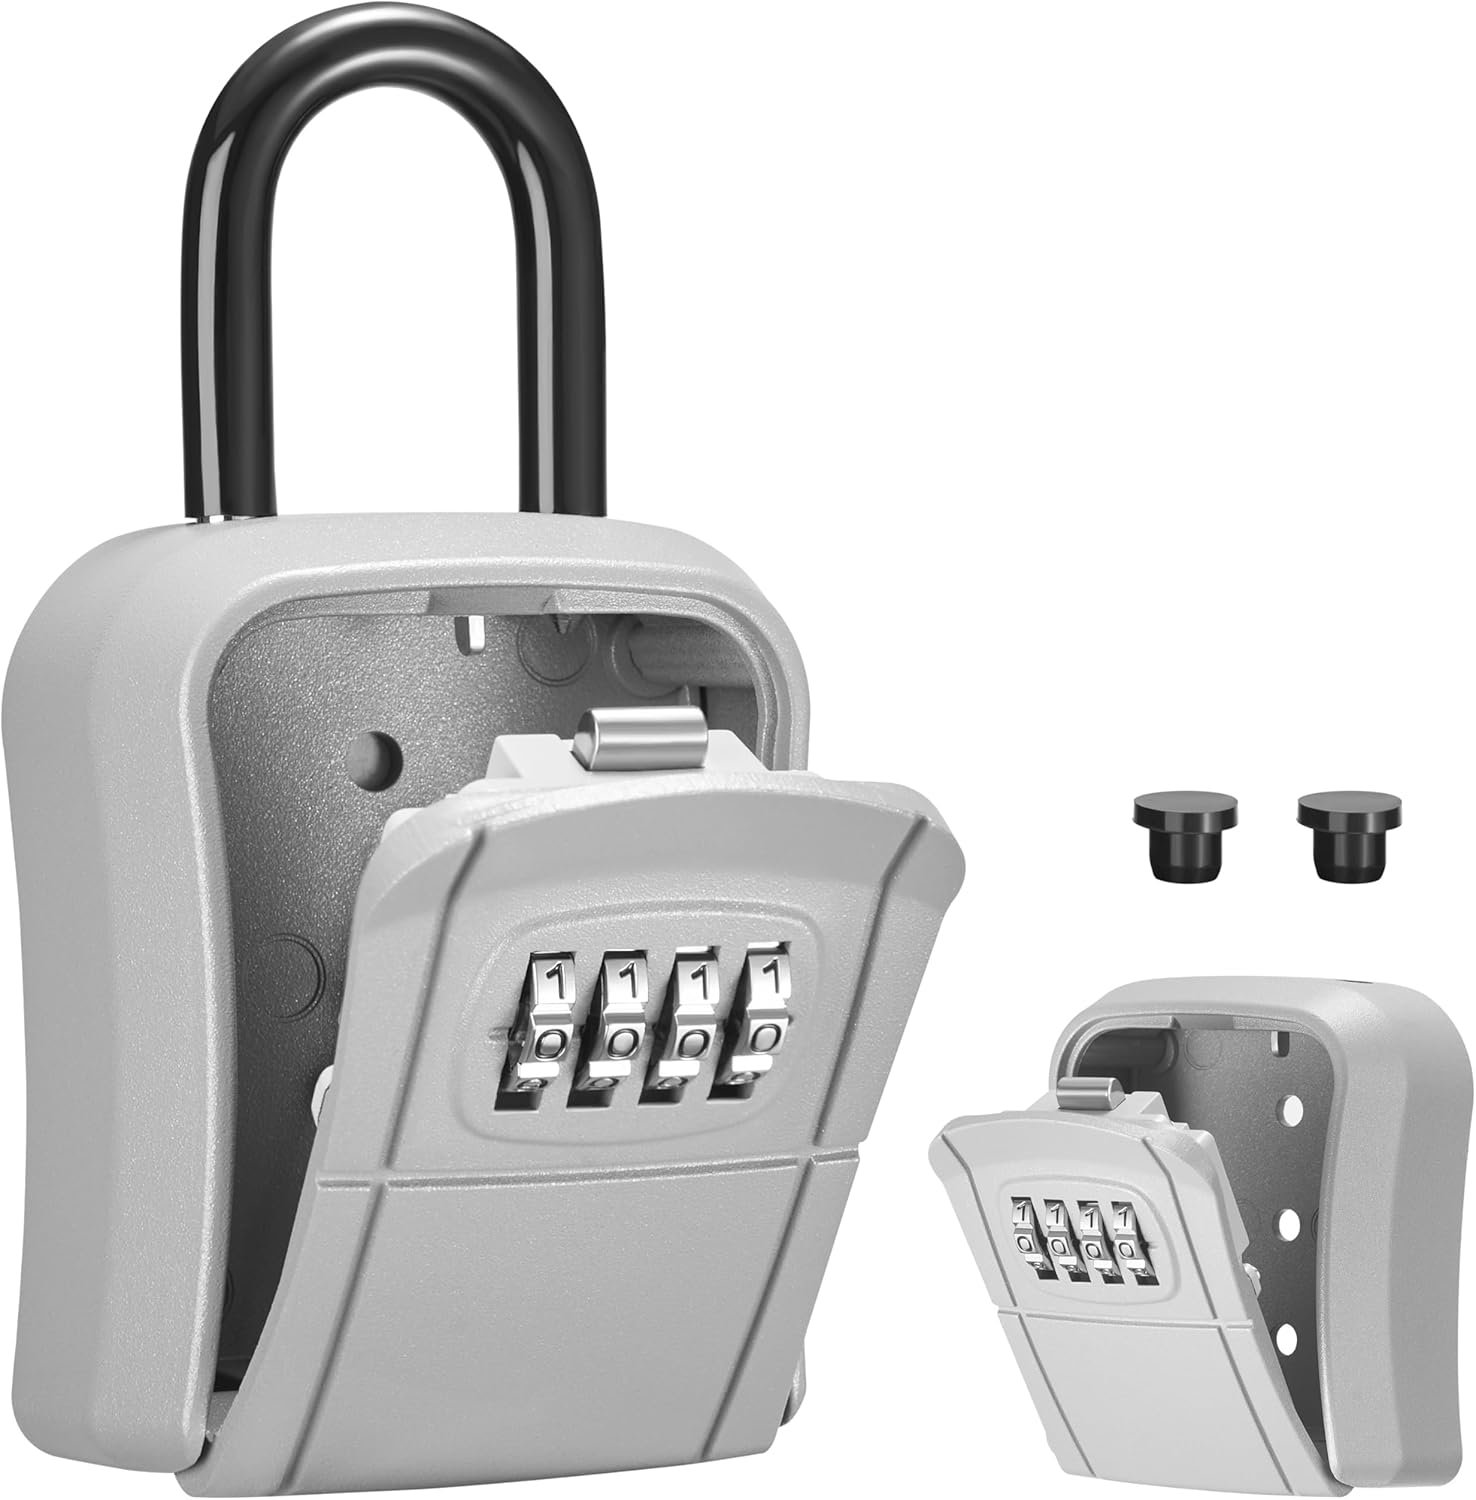 Puroma Key Lock Box Review